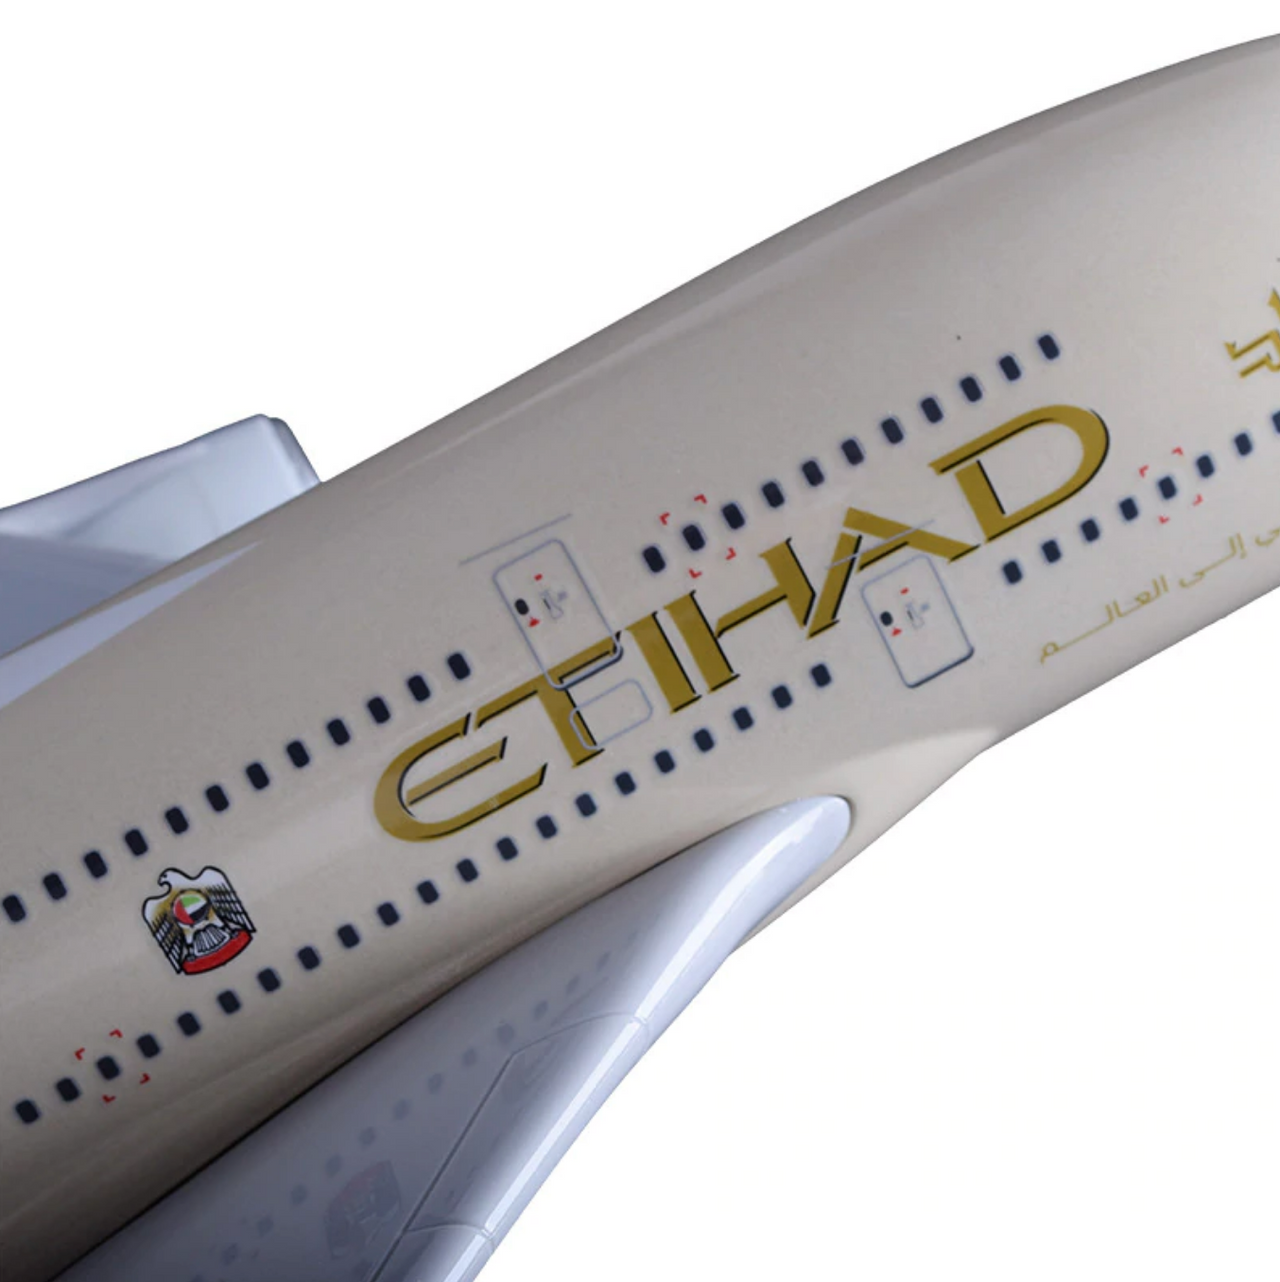 Etihad Airways Airbus A380 Airplane Model (Handmade 45CM)